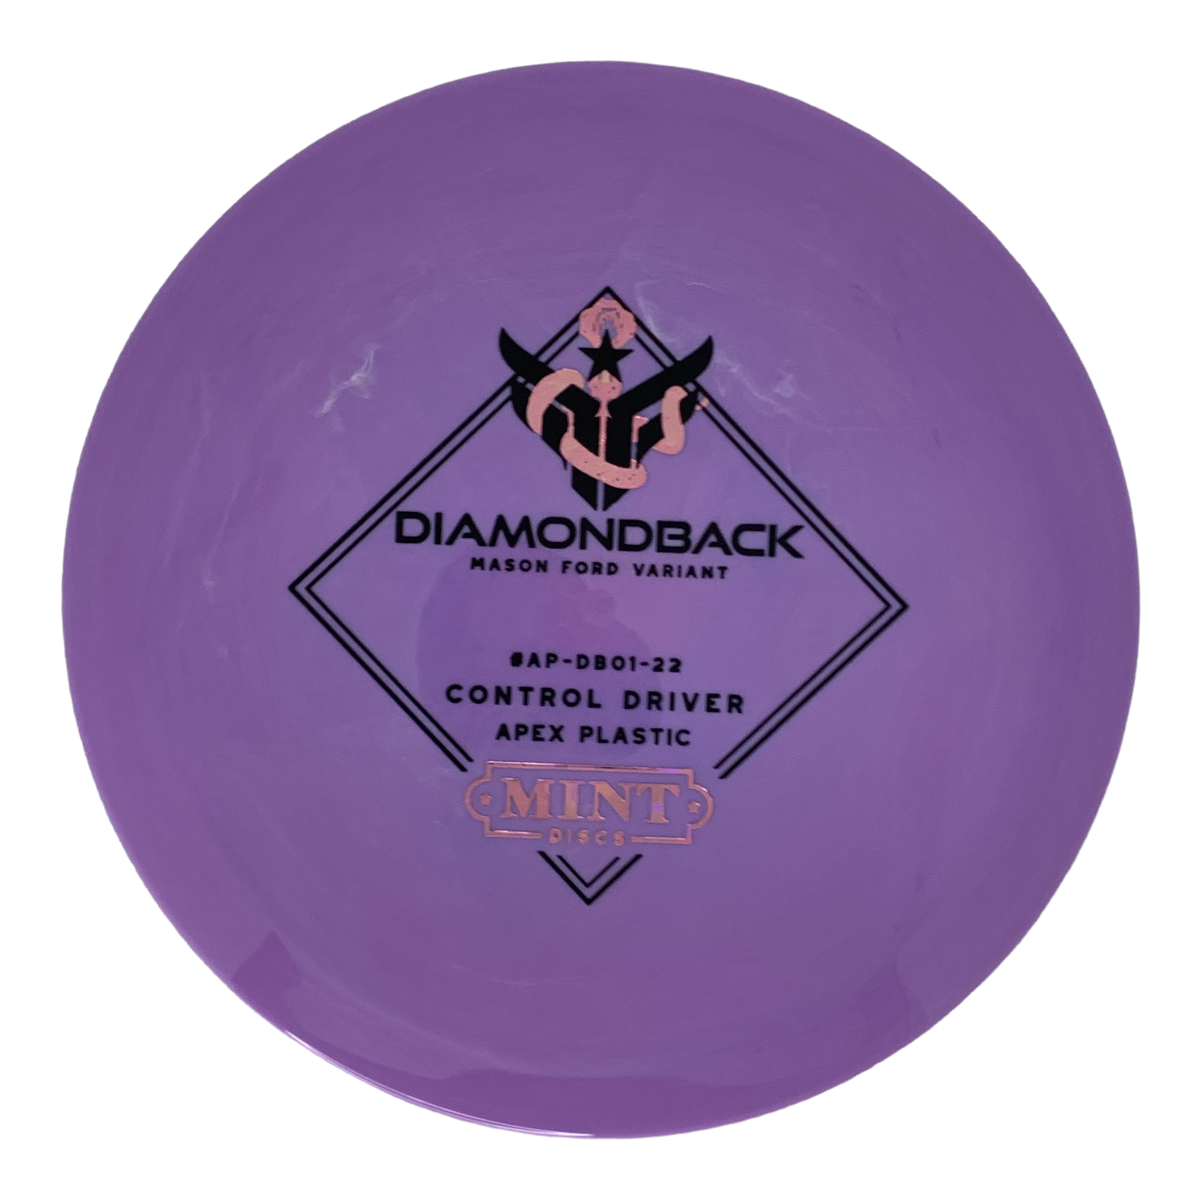 Mint Discs Apex Diamondback - Mason Ford Variant